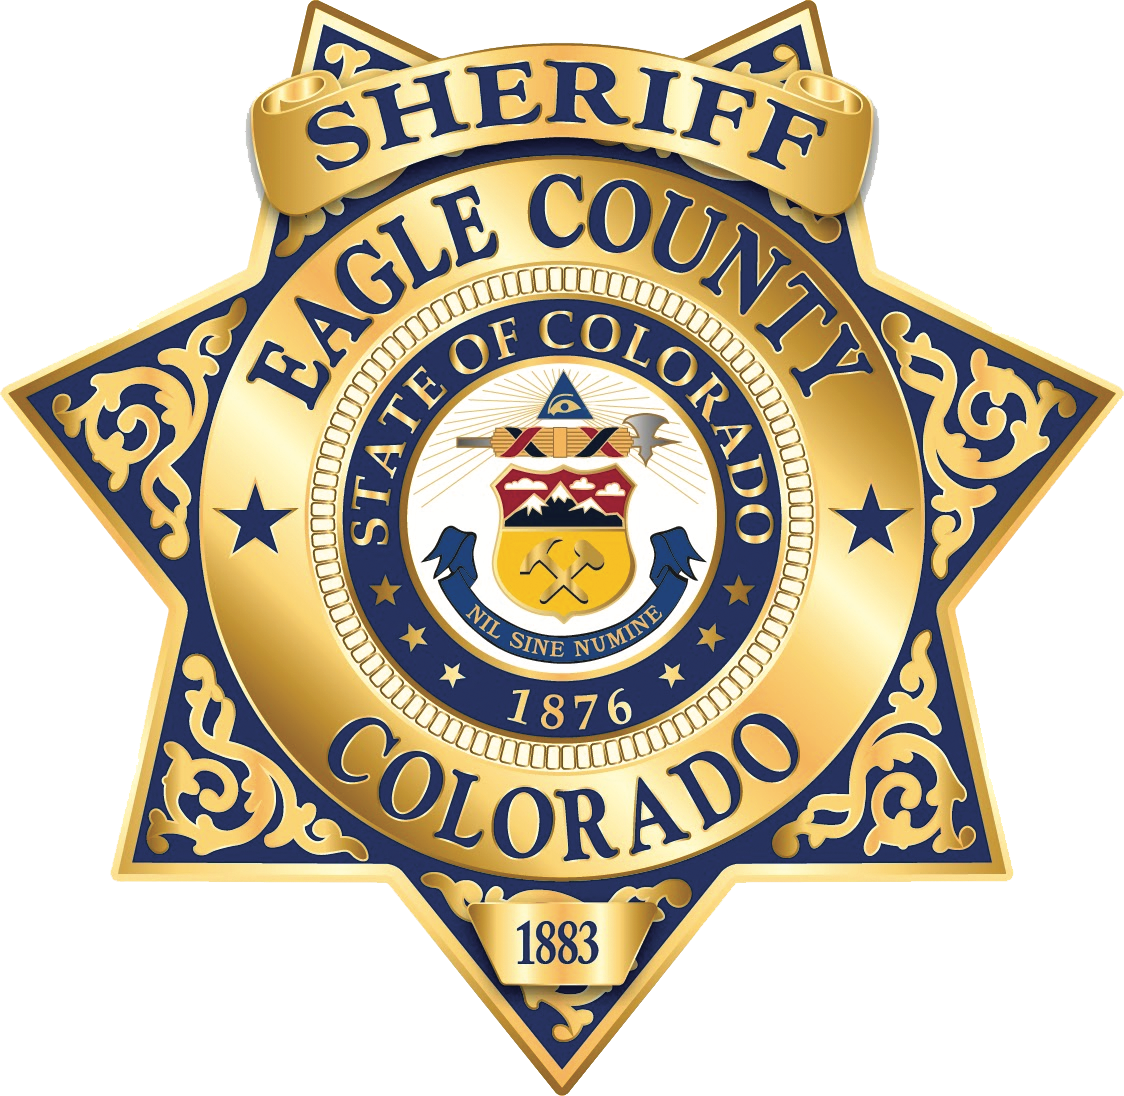 Eagle County Sheriff